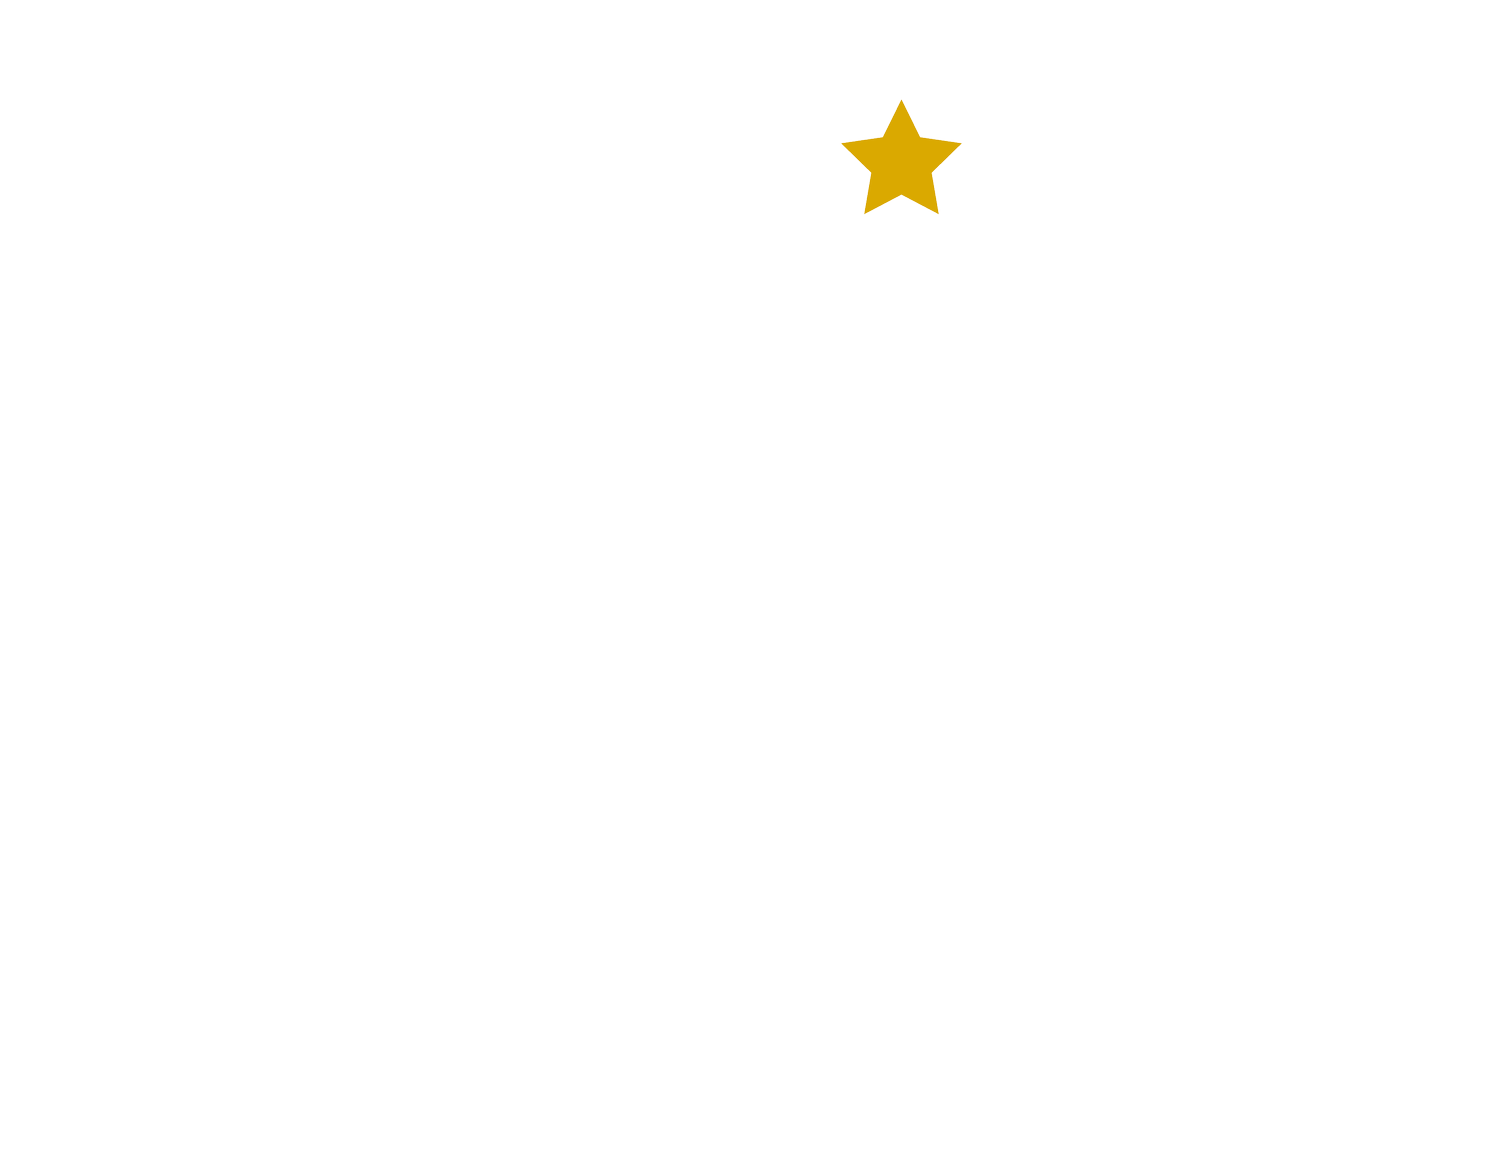 BLOCS  |  Business Leadership Organized for Catholic Schools